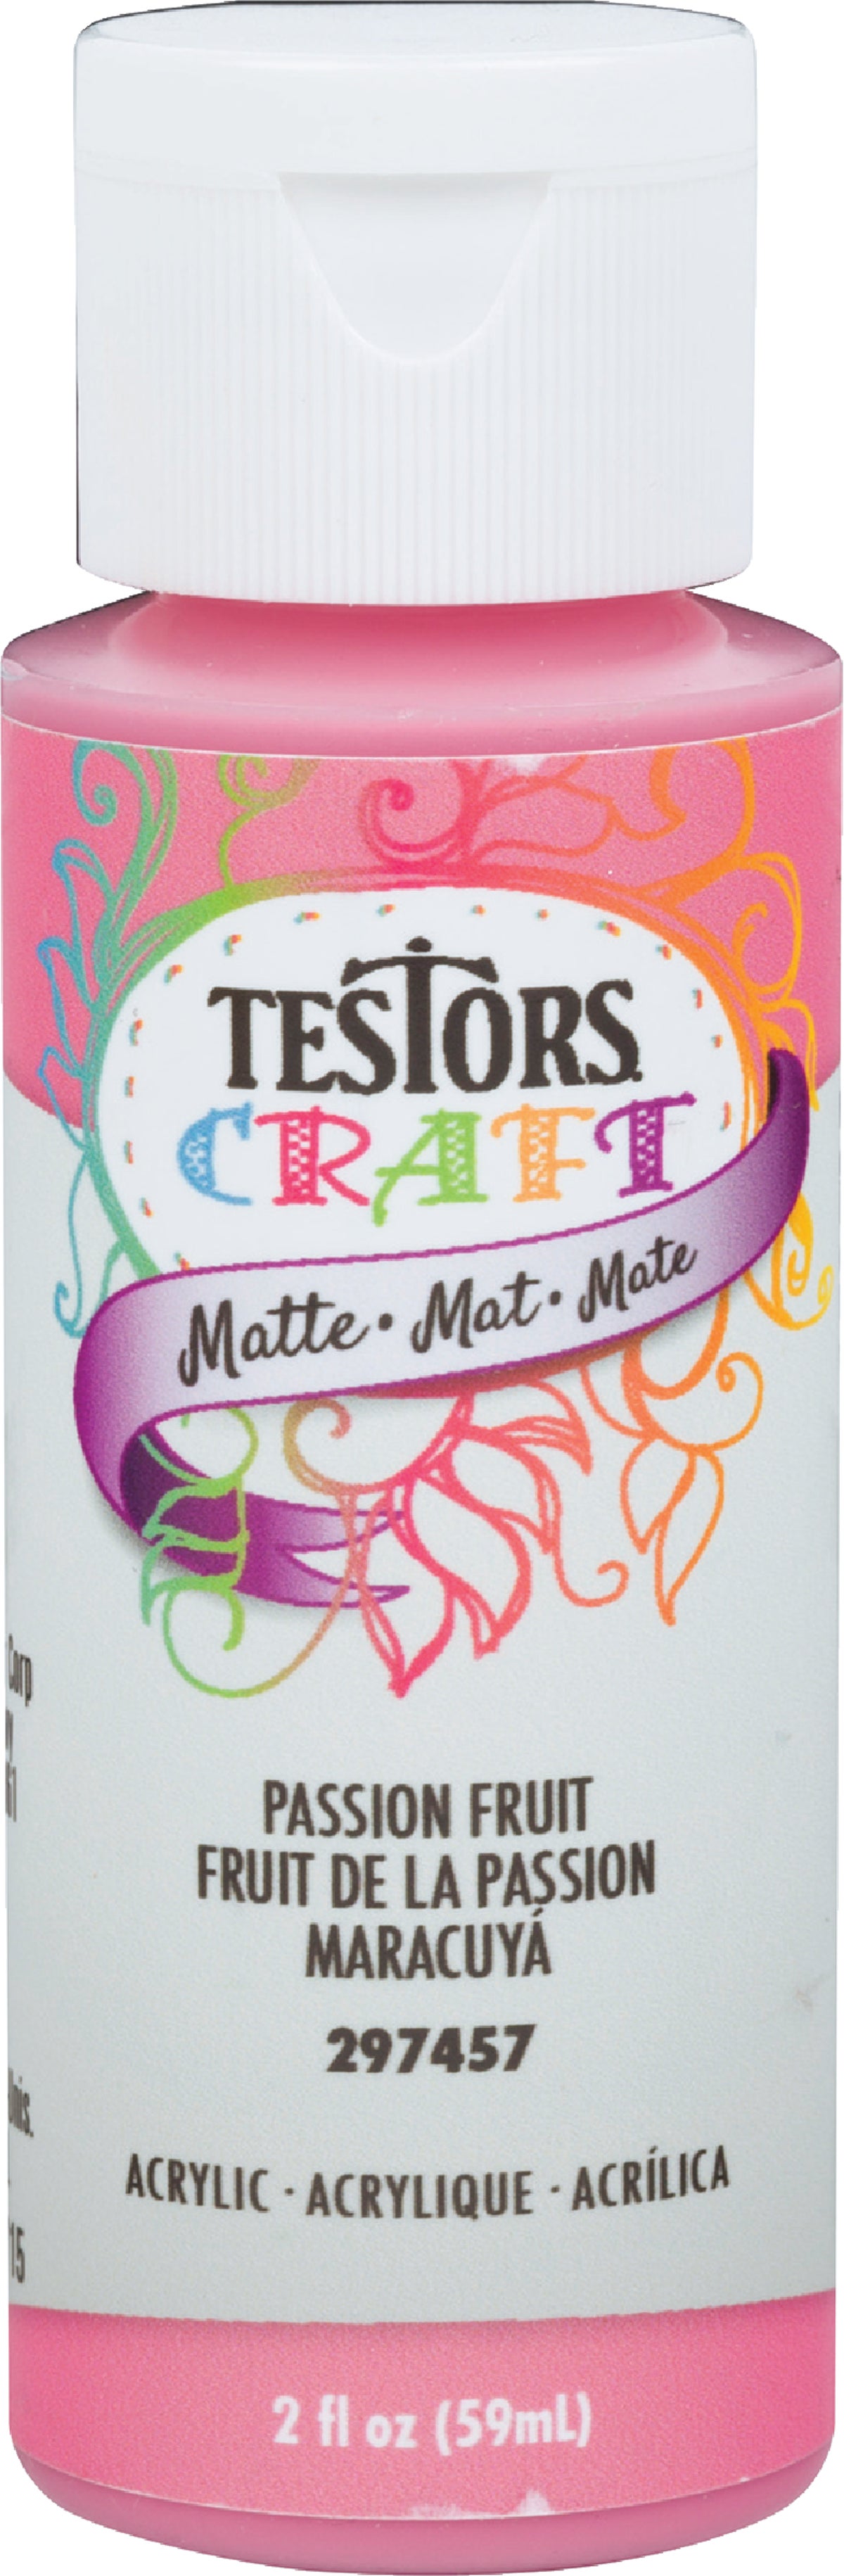 Testors Craft Matte White Acrylic Paint